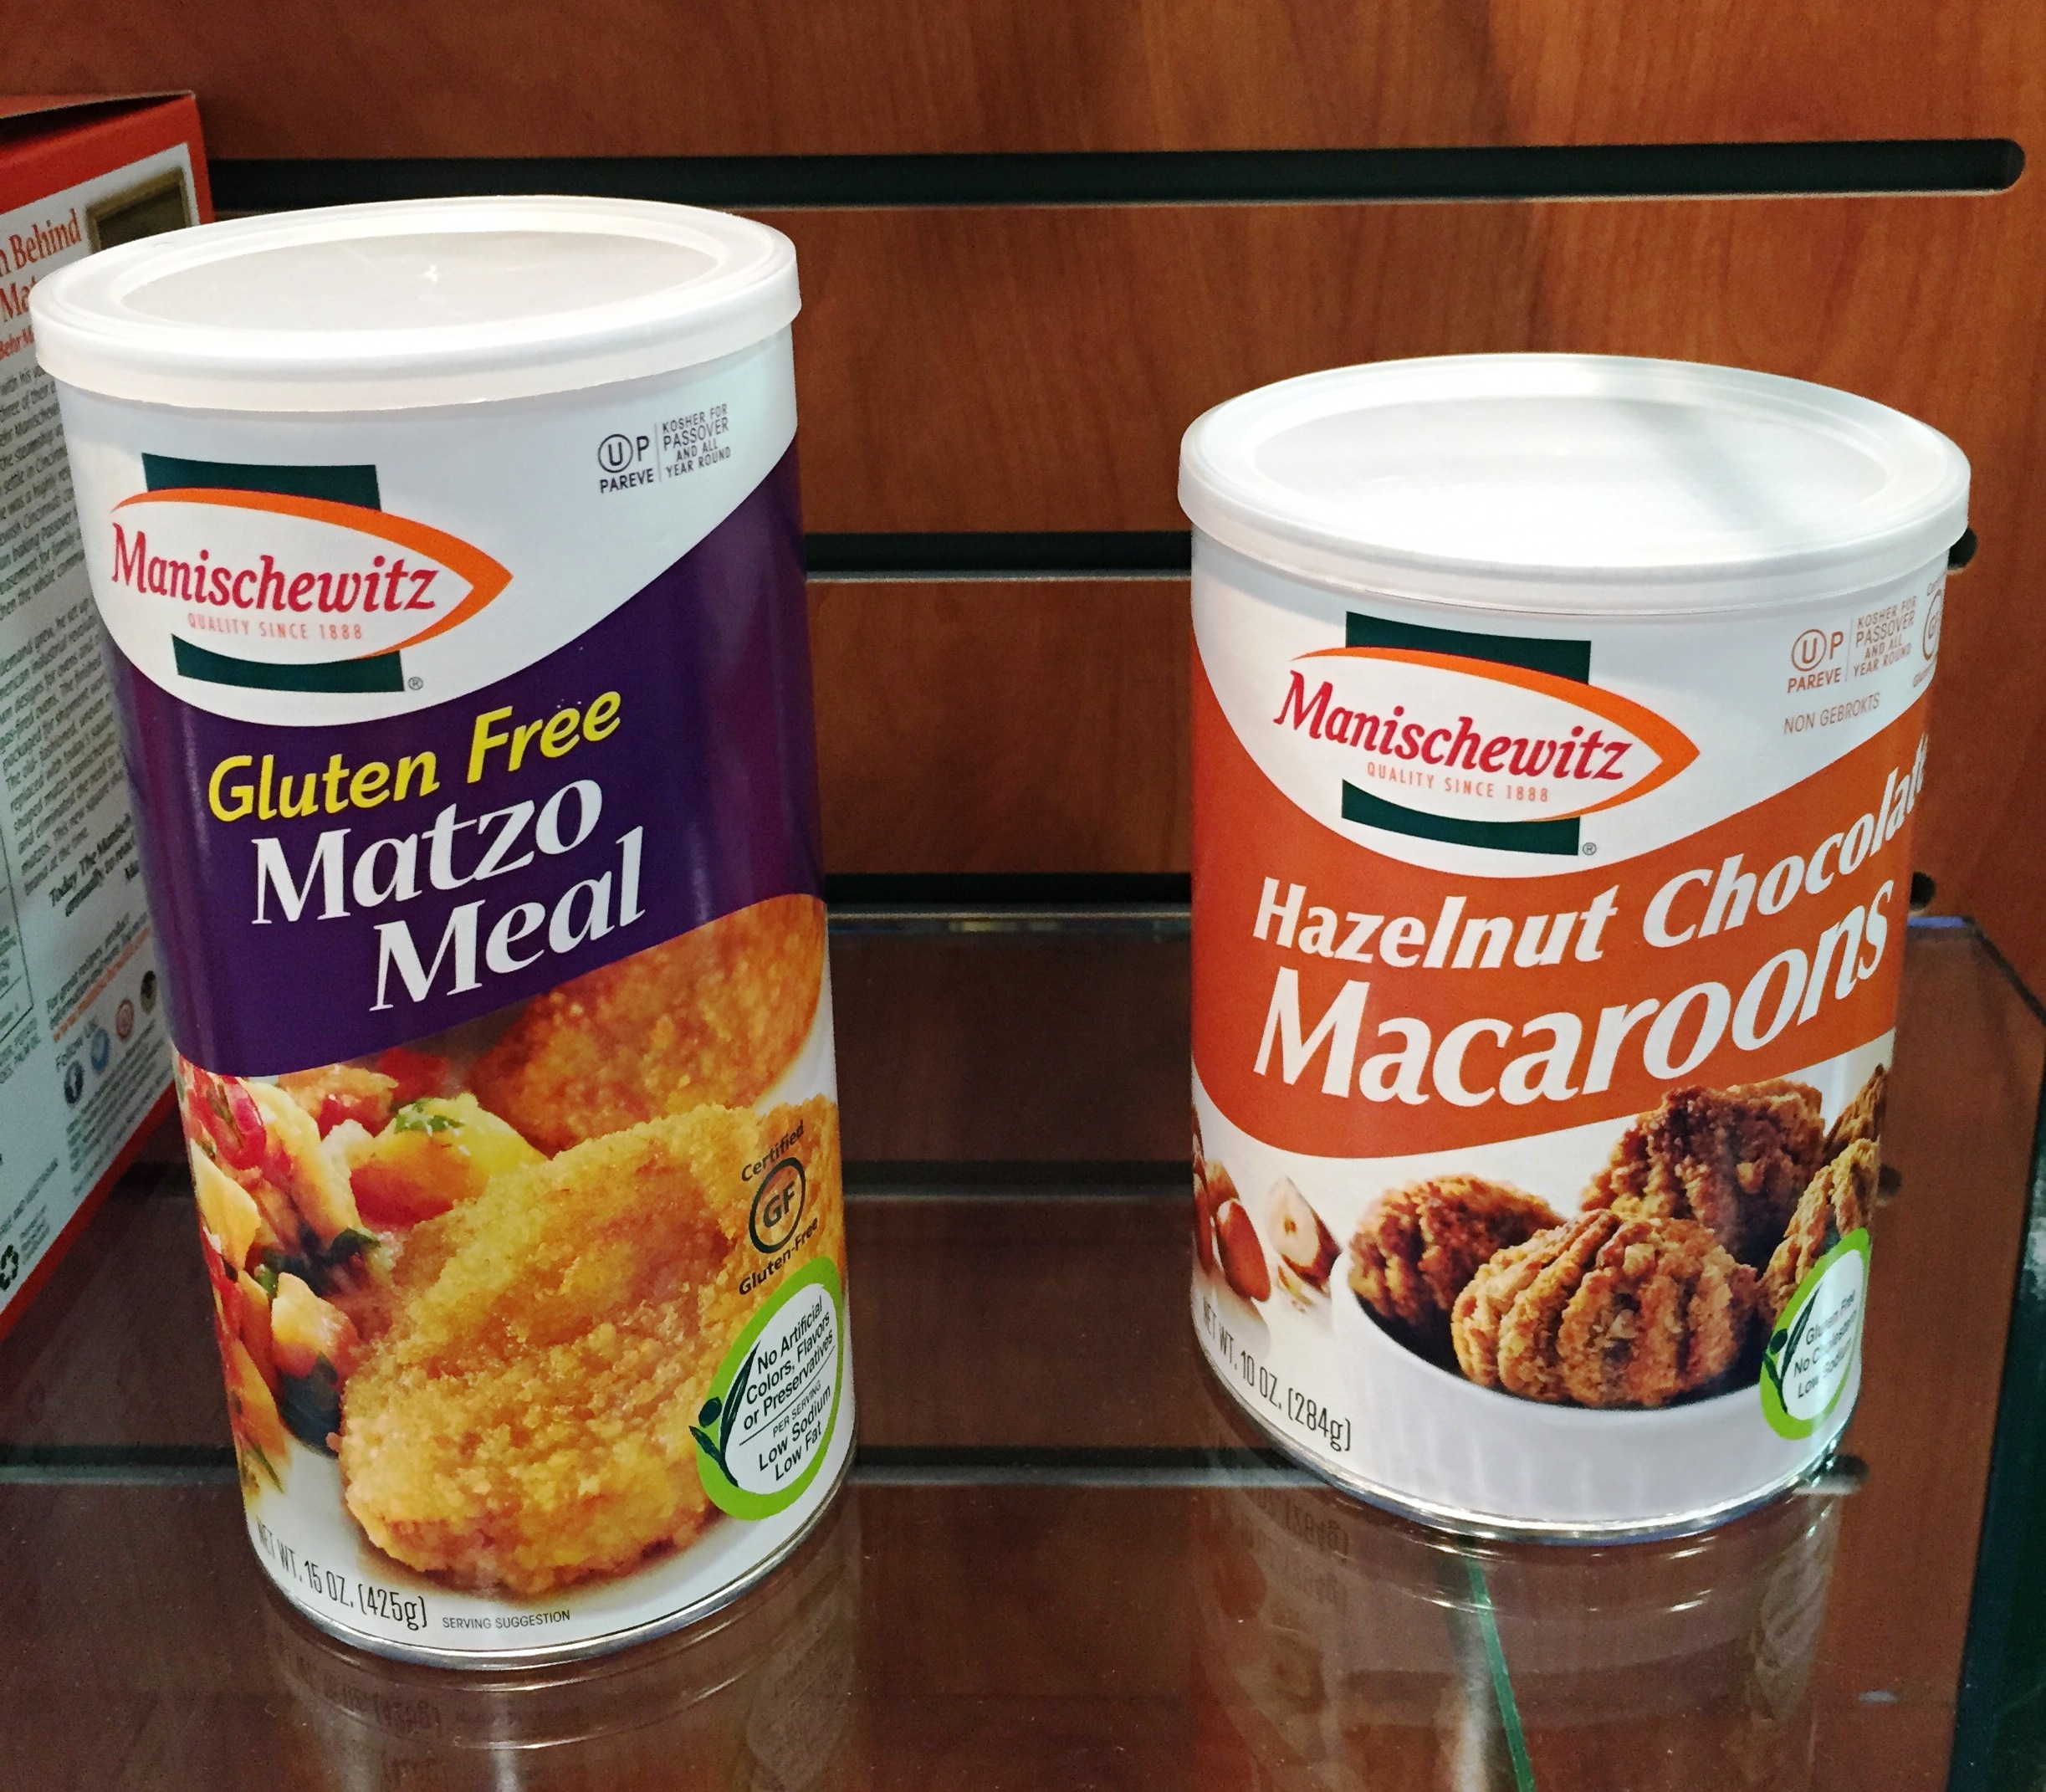 Manischewitz has gluten-free matzo meal and new macaroons.jpg